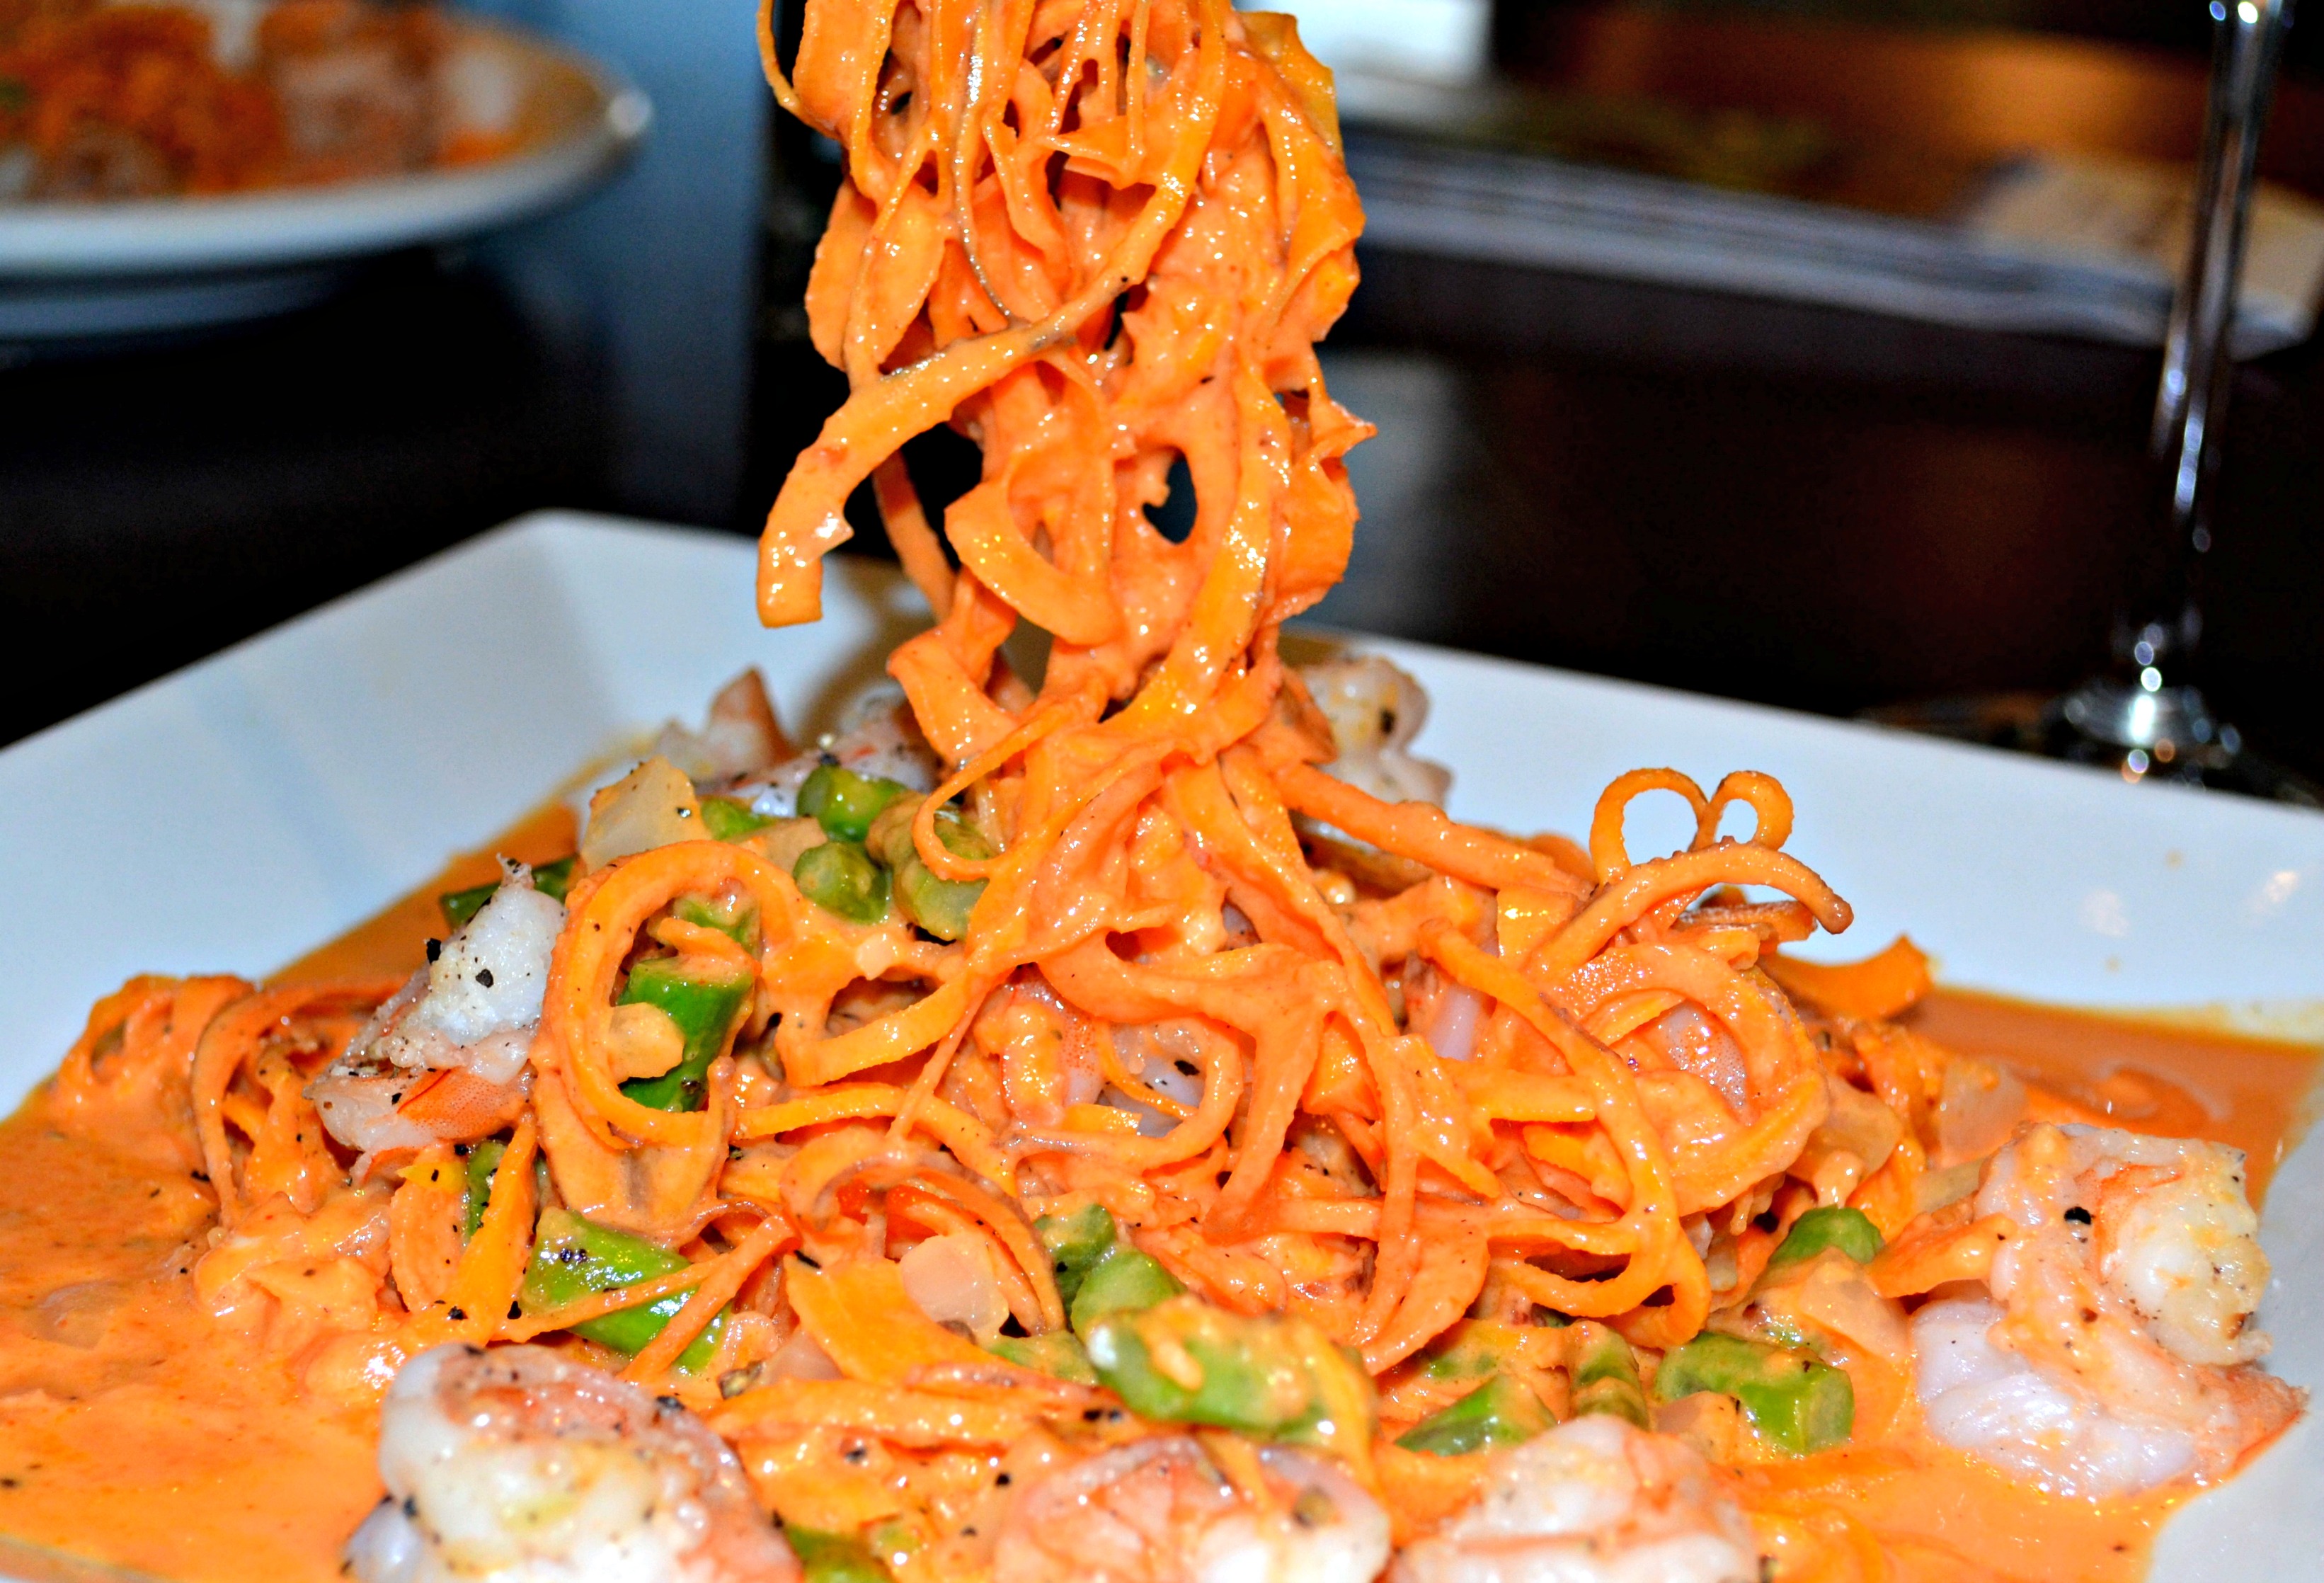 Sweet Potato “Spaghetti” with Sauteed Shrimp and a Roasted Red Pepper Cream Sauce